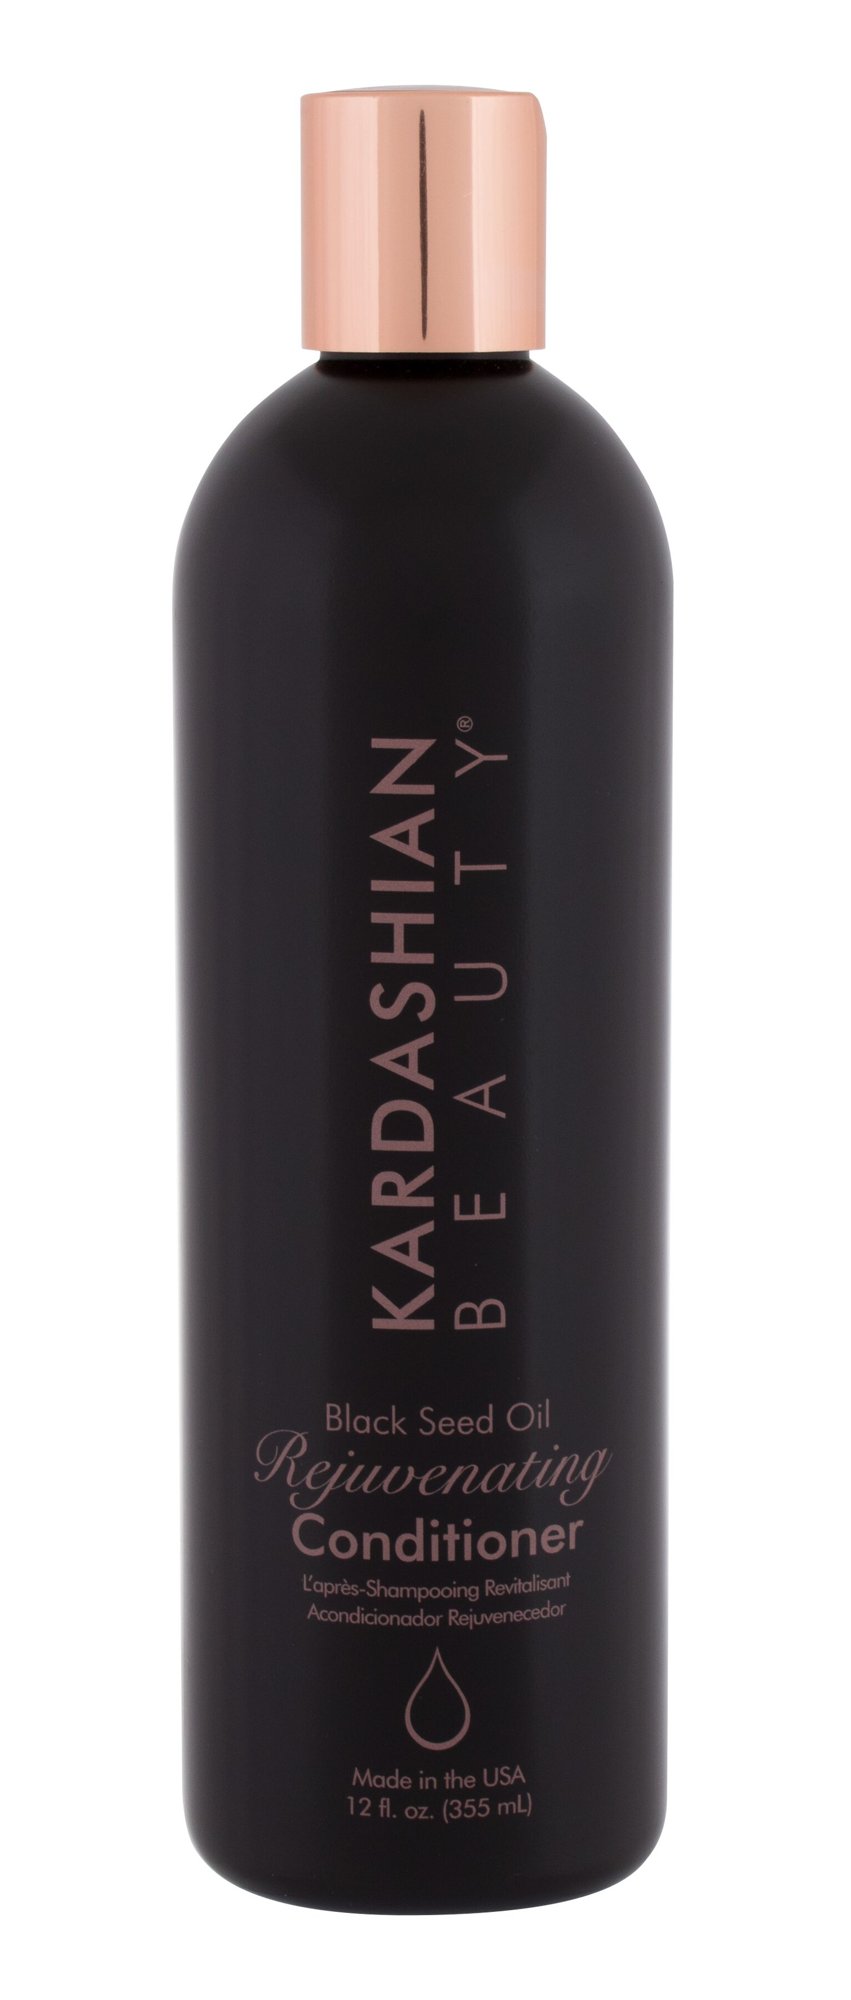 Kardashian Beauty Black Seed Oil Rejuvenating 355ml kondicionierius